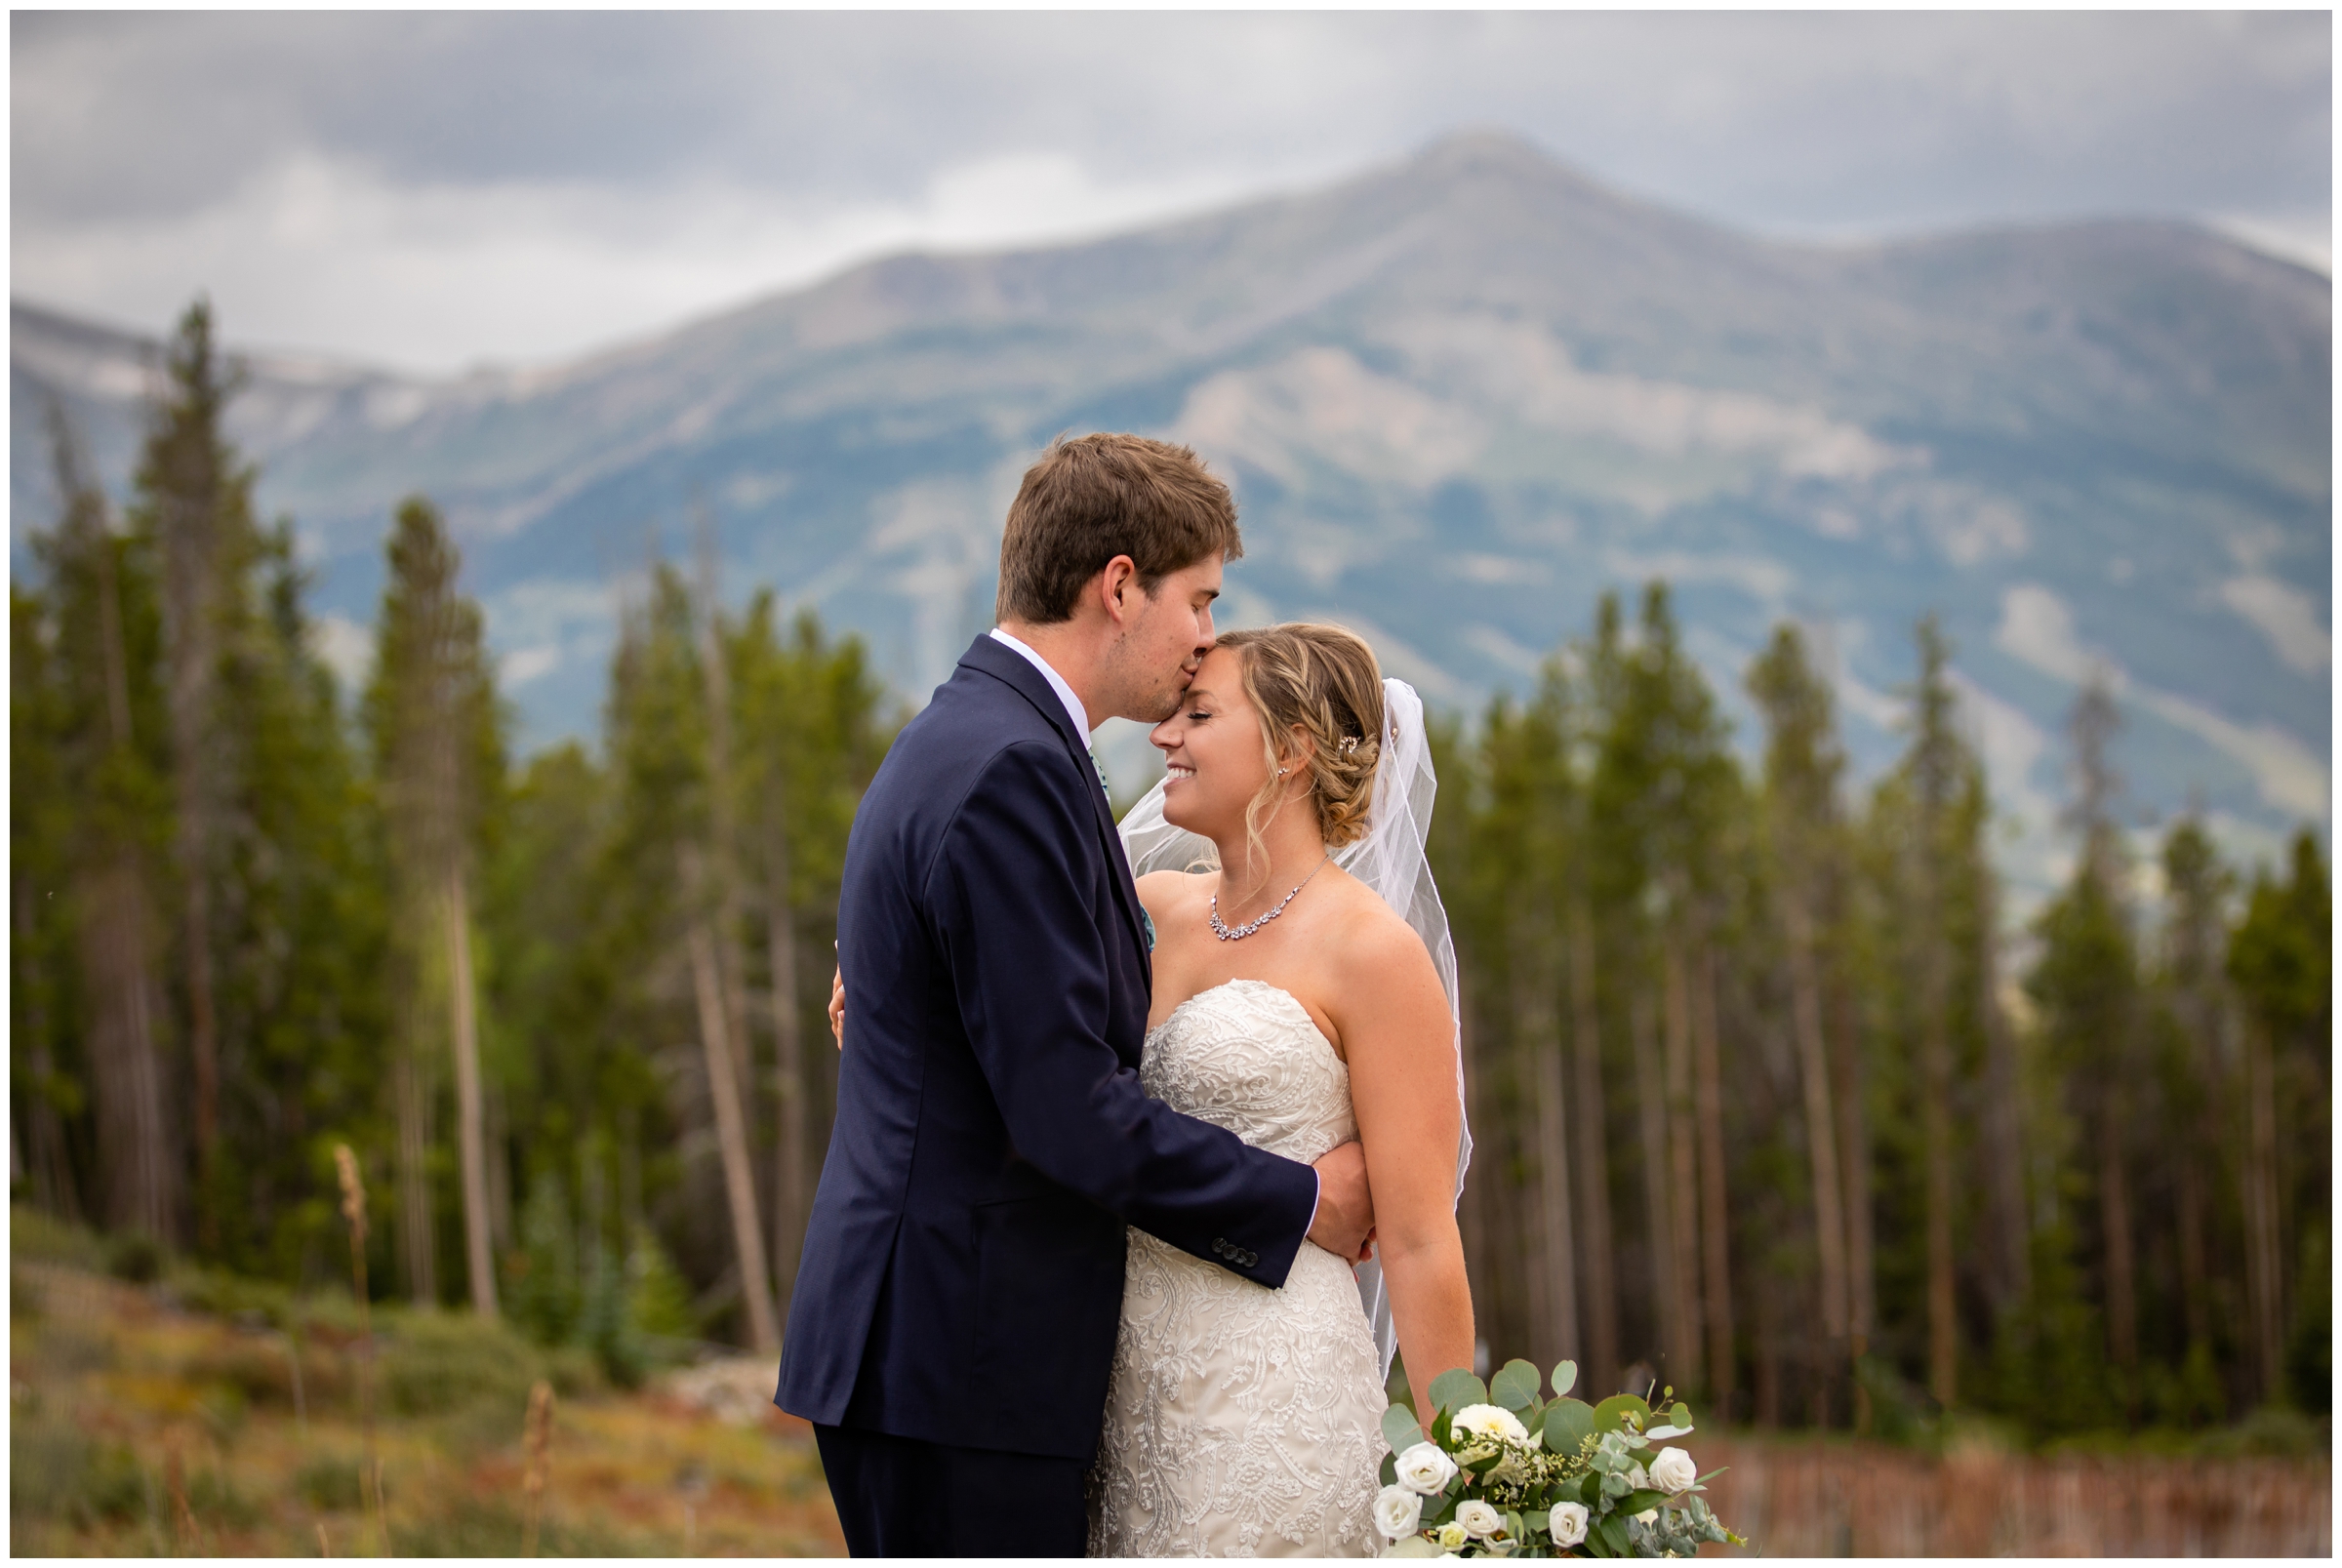 Breckenridge Colorado mountain wedding pictures by Plum Pretty Photo 